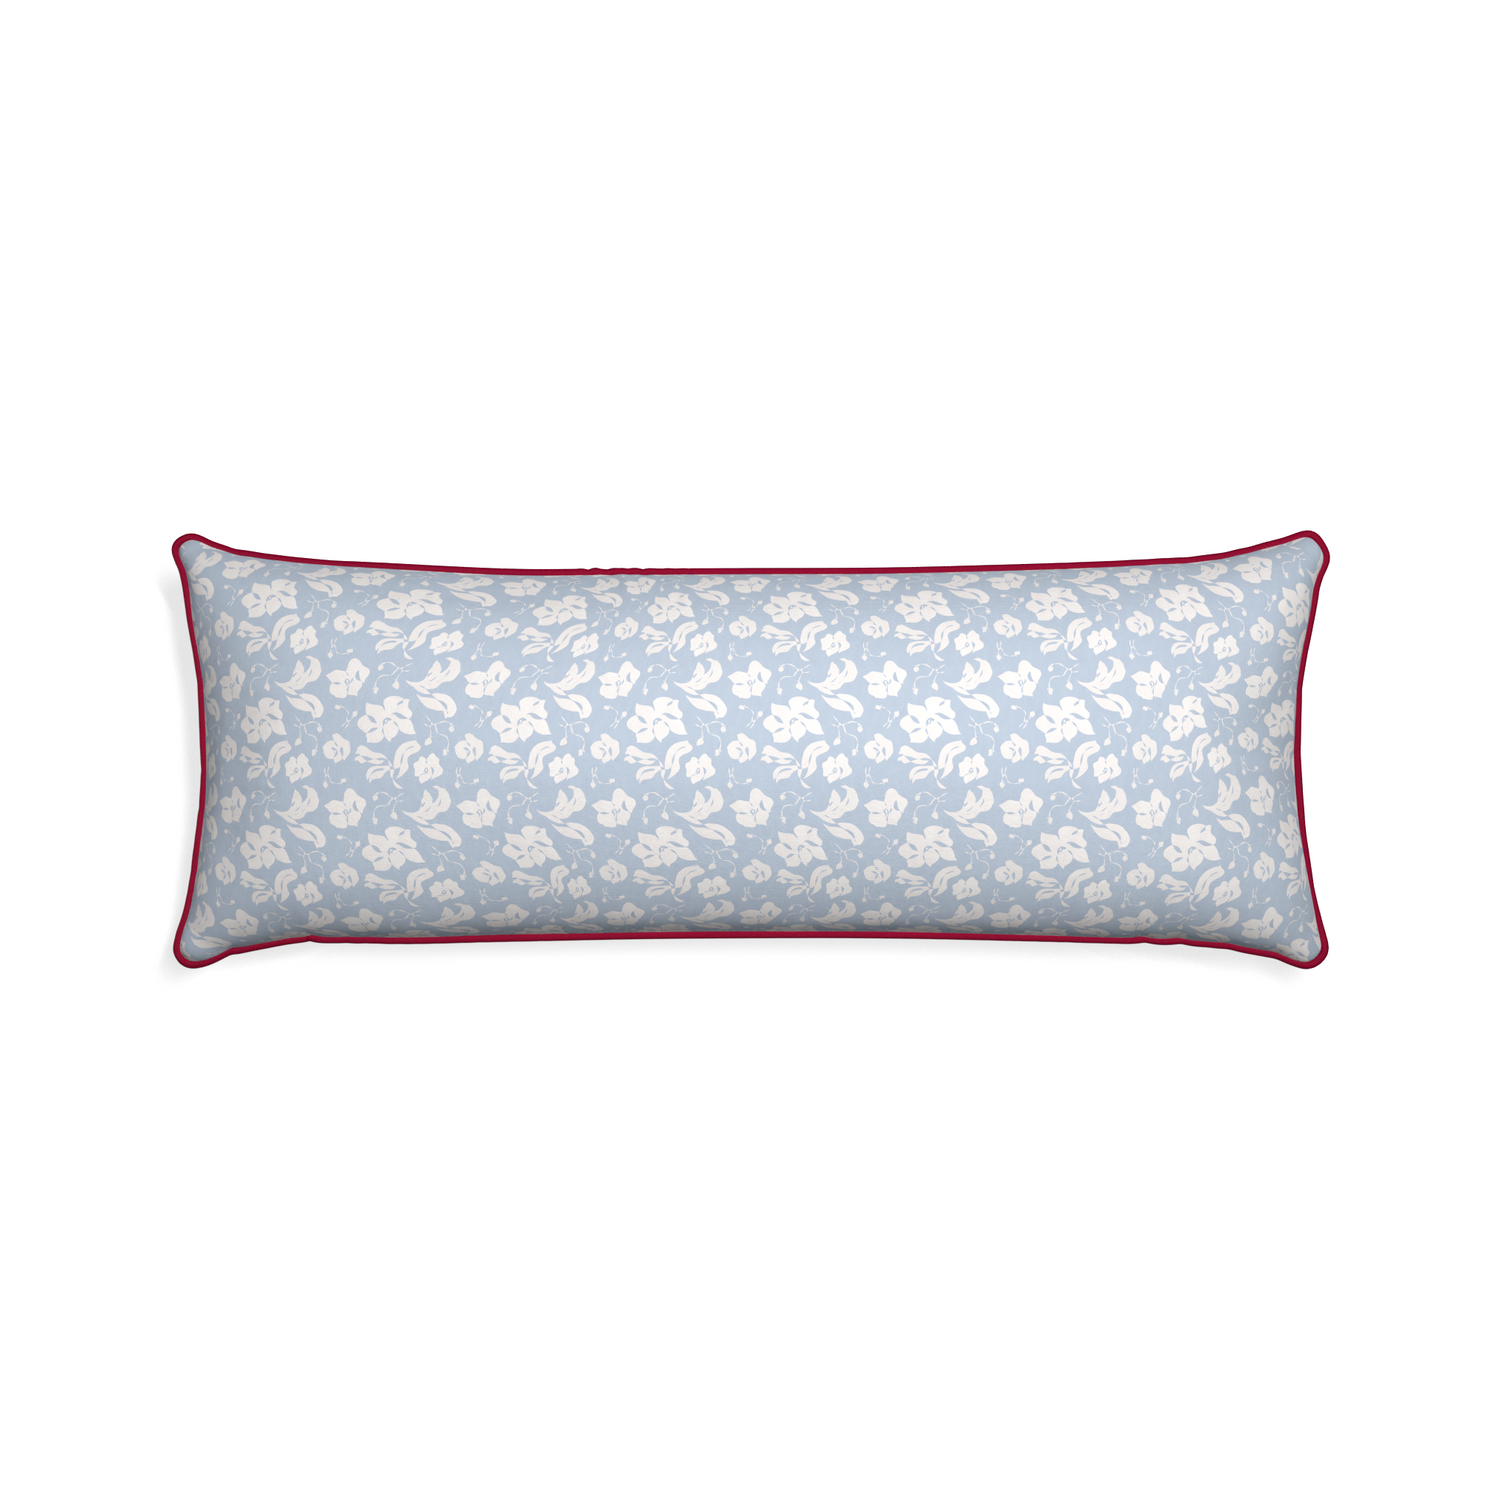 Xl-lumbar georgia custom pillow with raspberry piping on white background